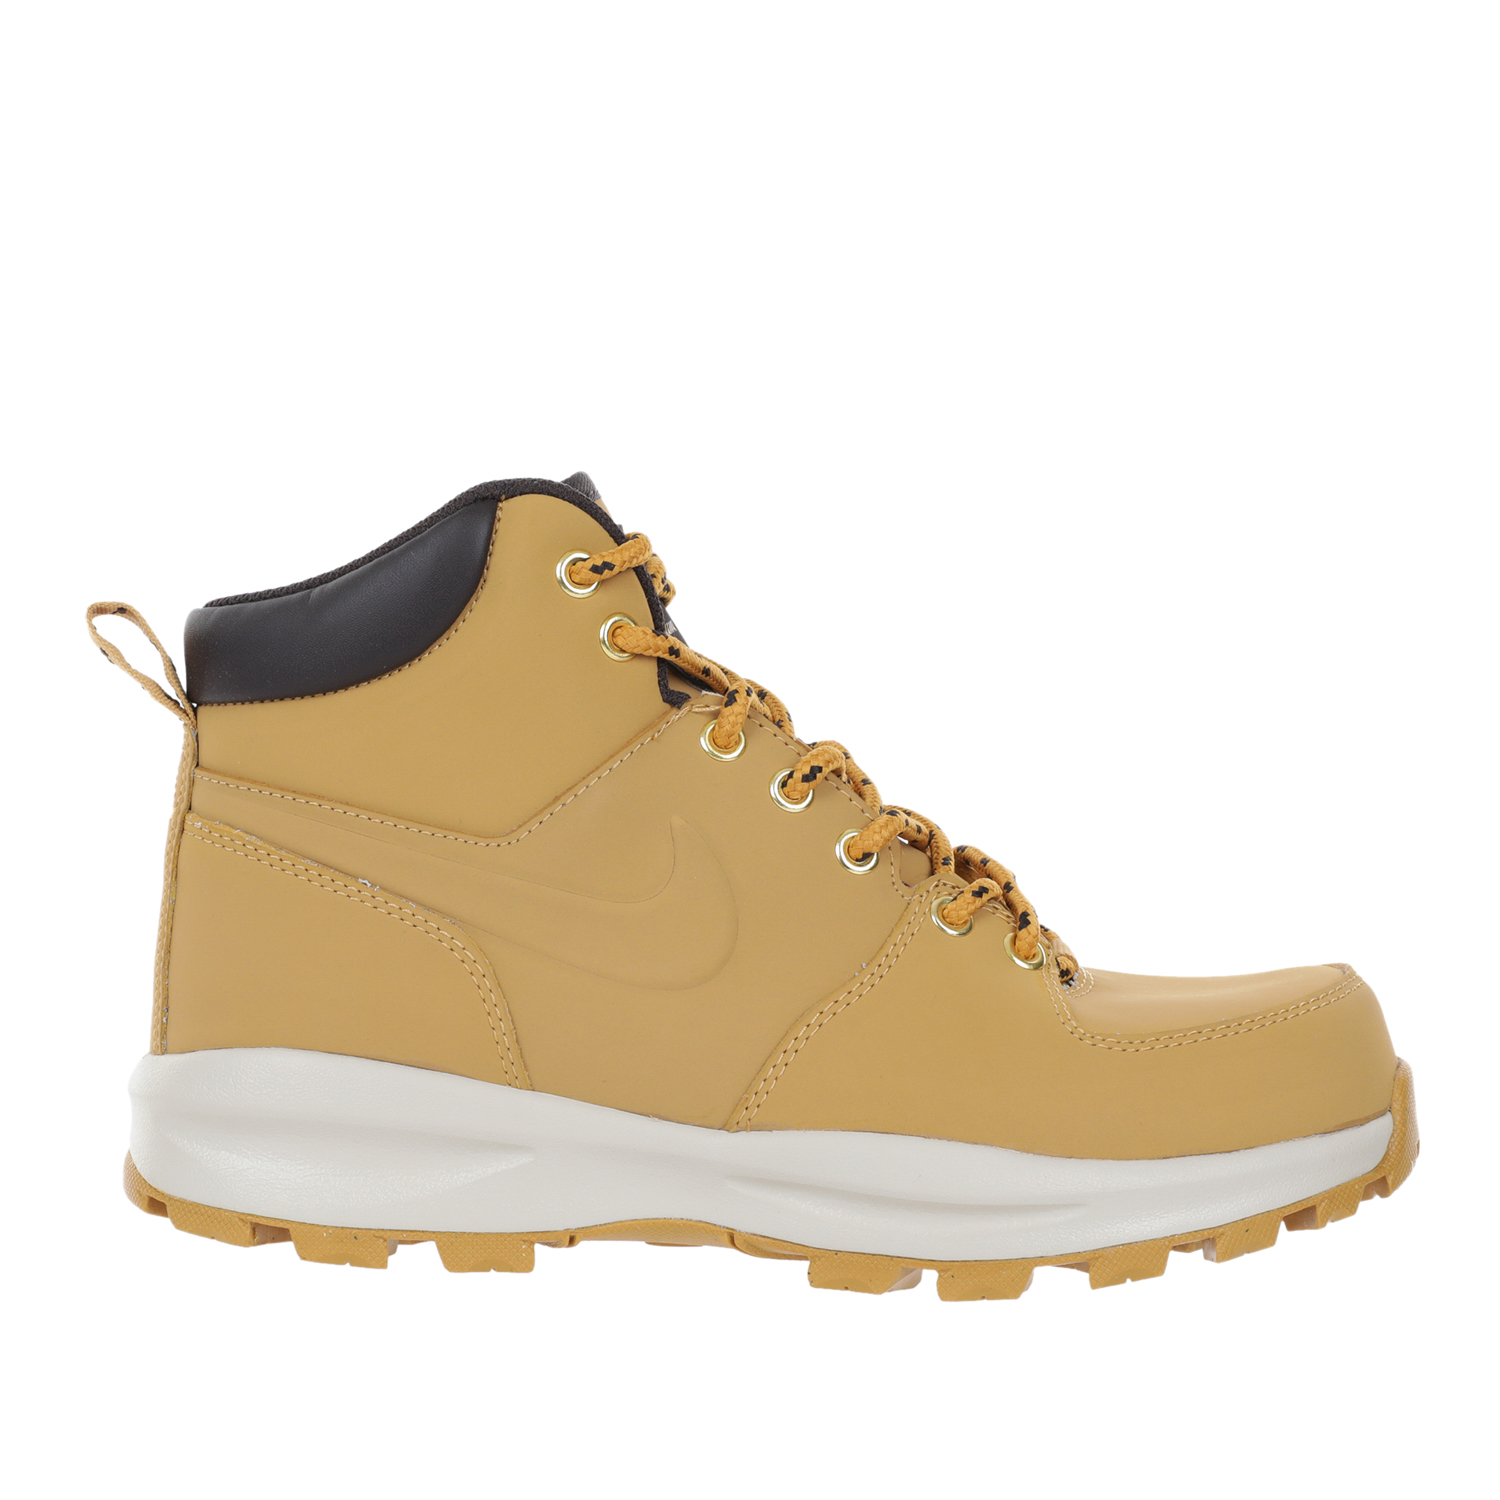 Ботинки мужские Nike Men's Manoa Leather Boot коричневые 11.5 US